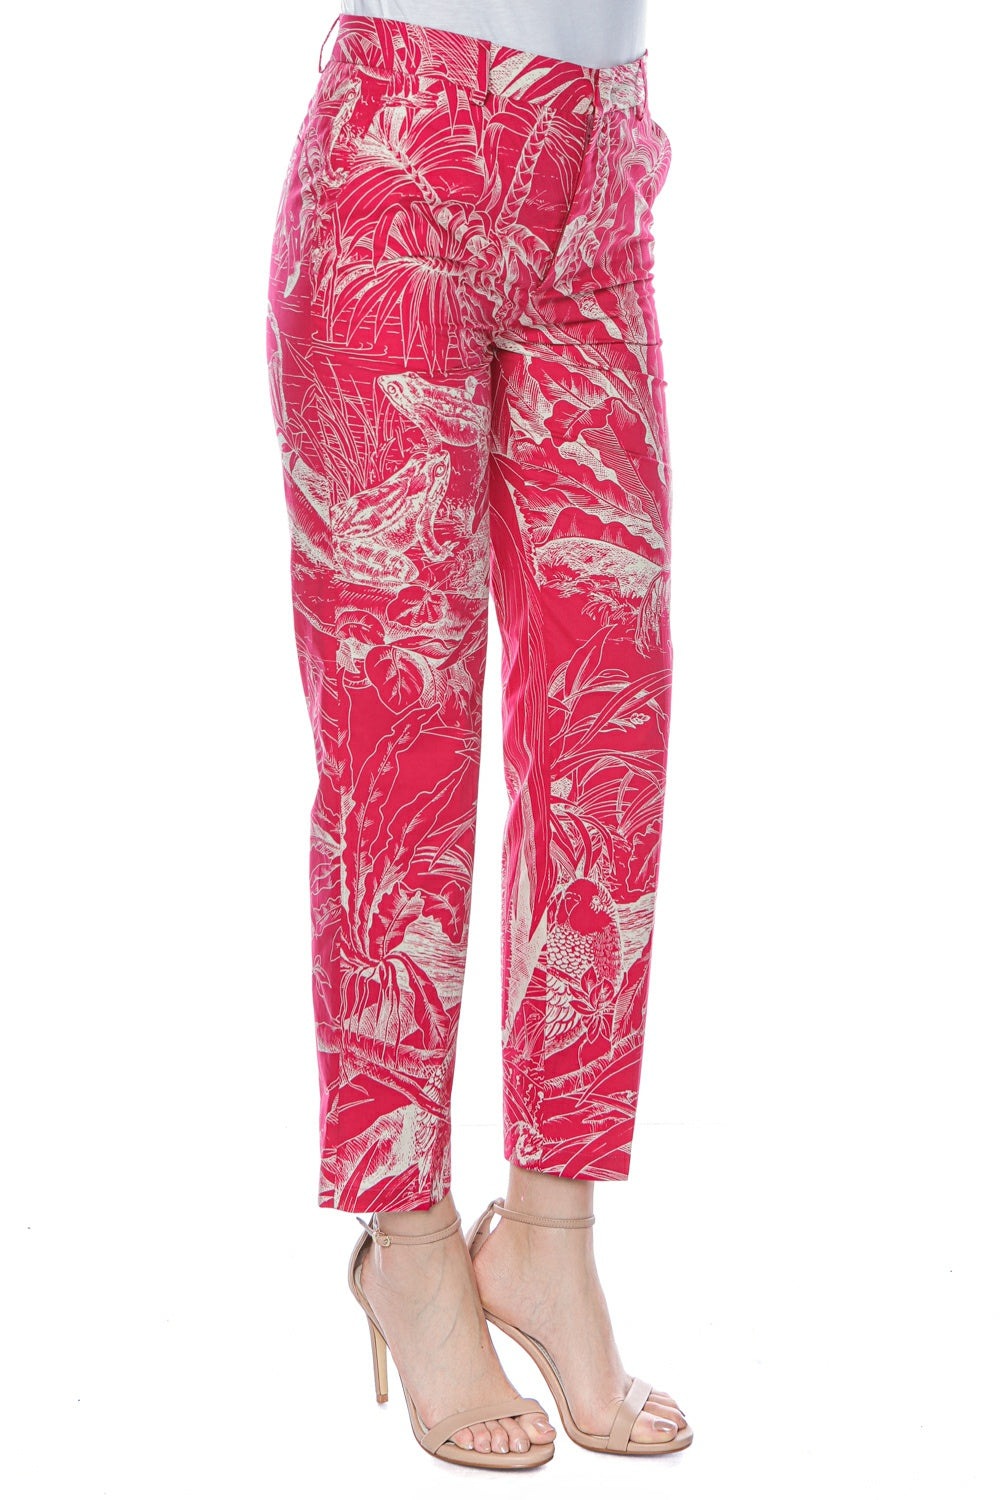 Pantaloni cu print floral Red Valentino